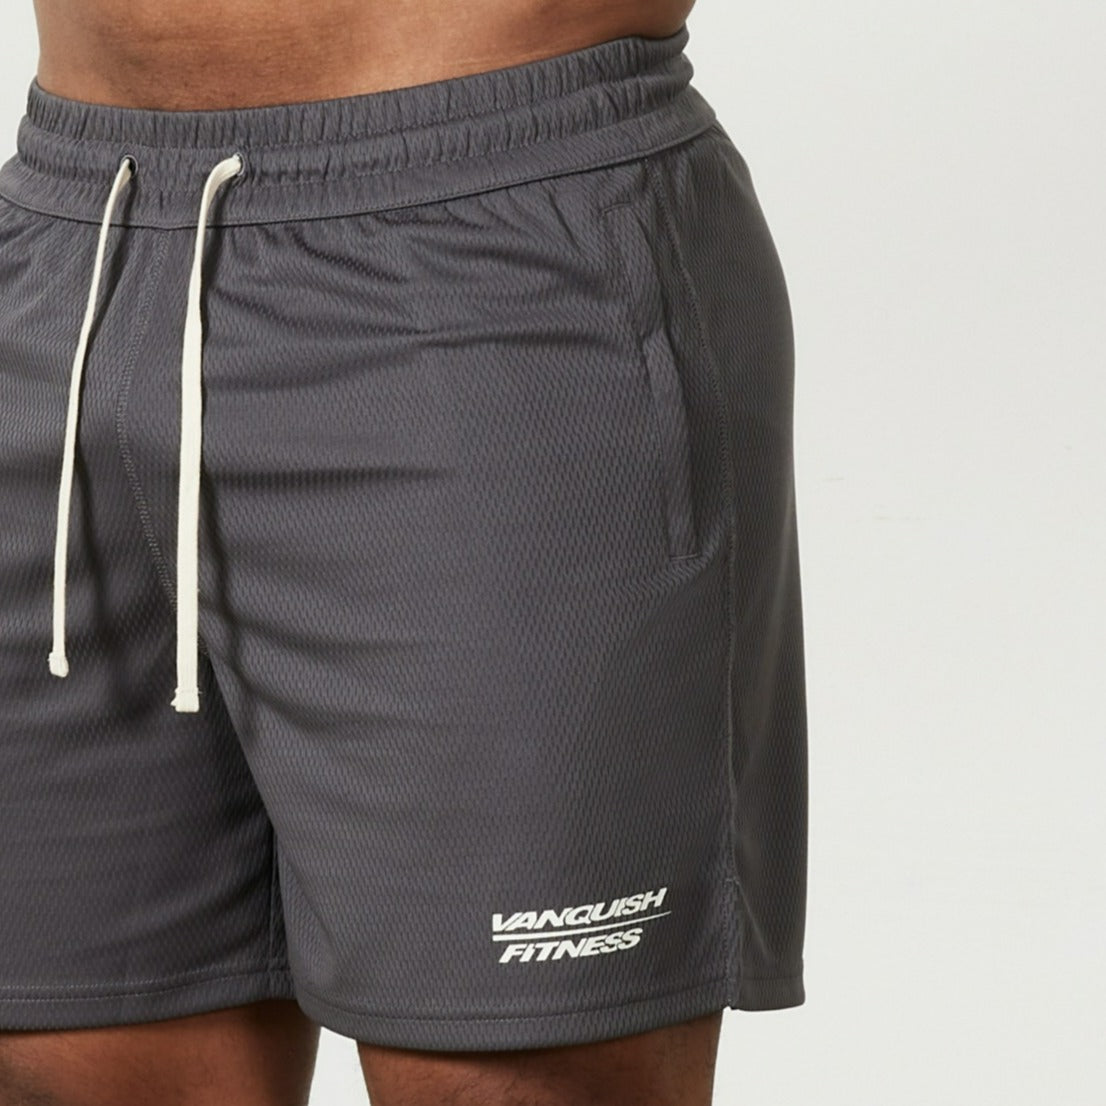 Vanquish Speed Charcoal Grey Mesh Shorts